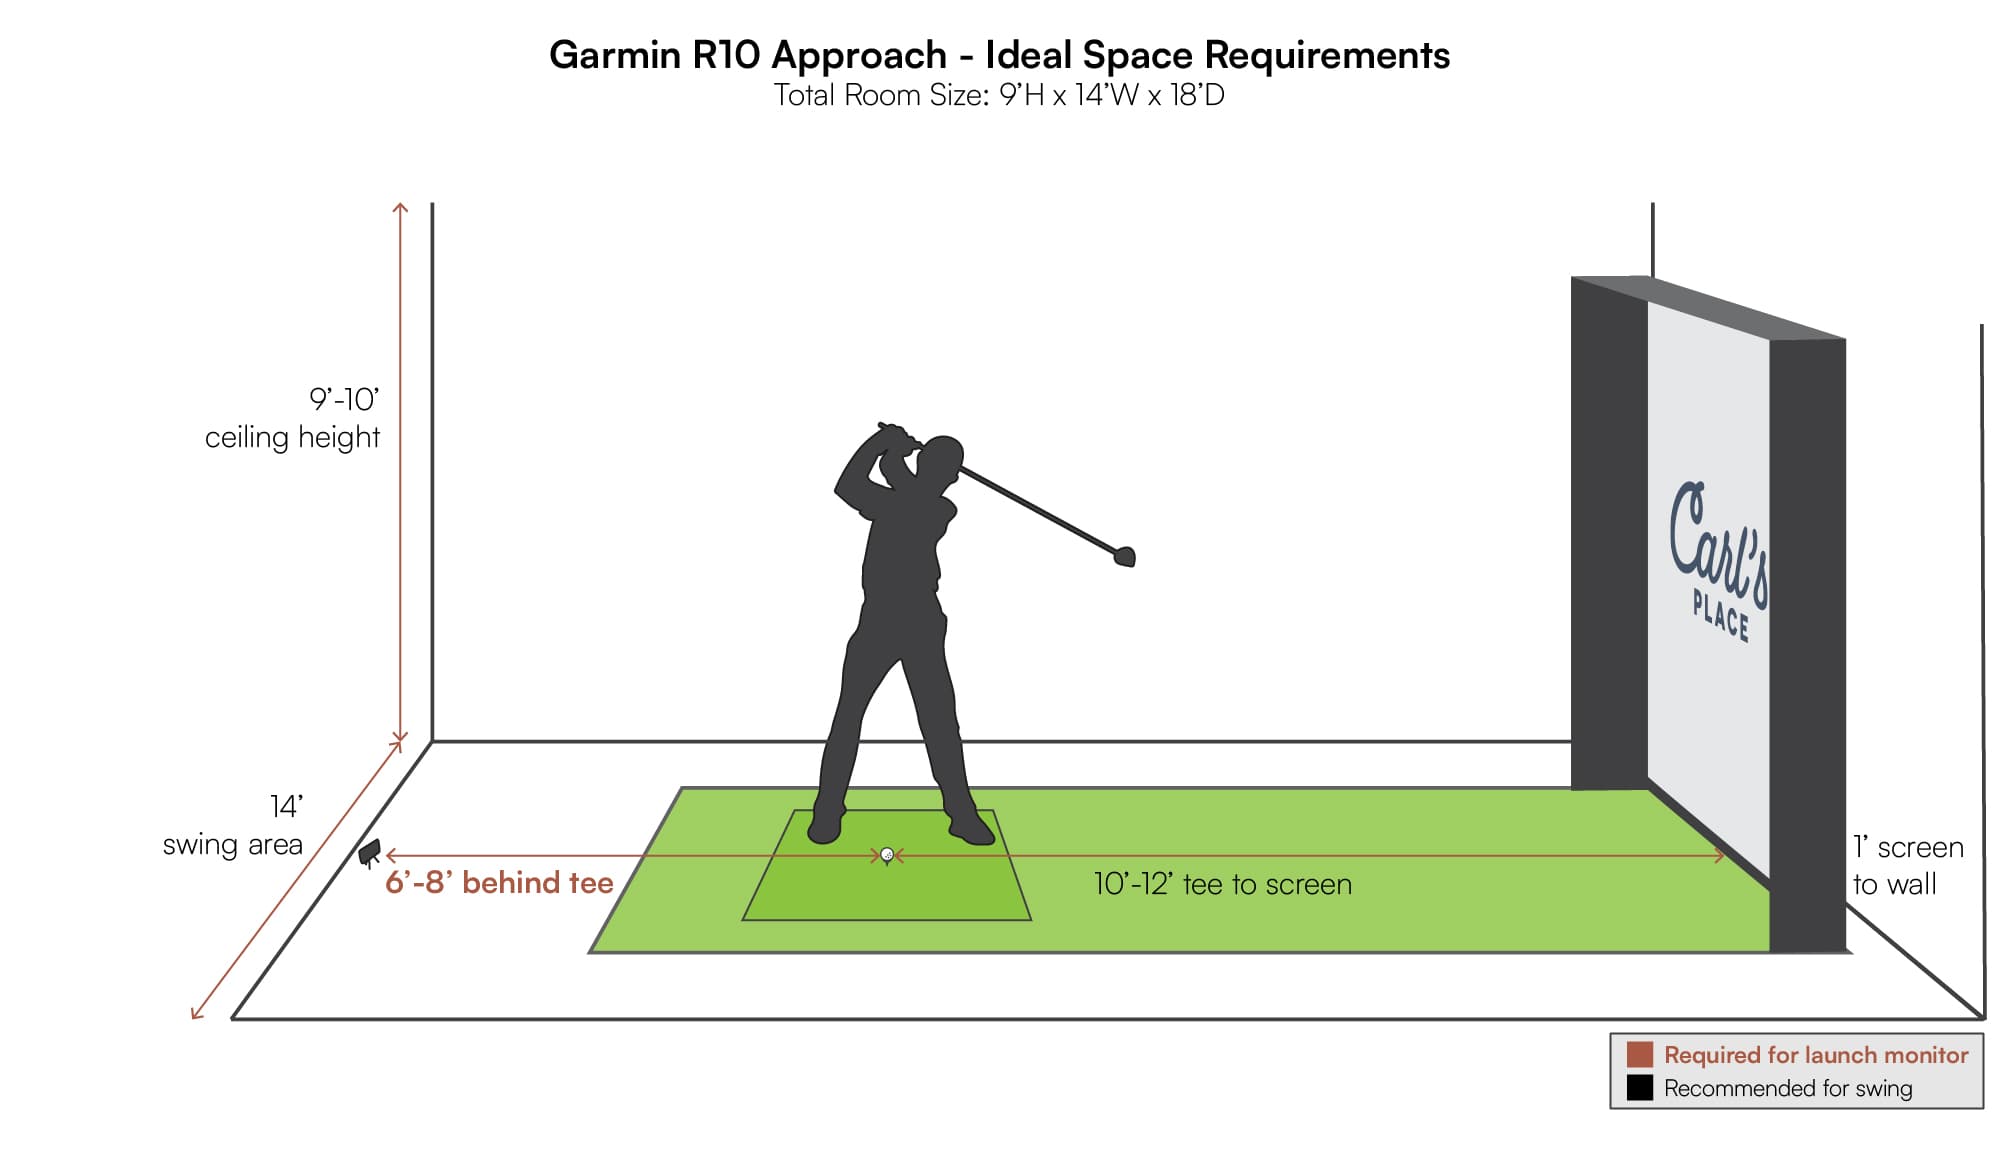 Garmin R10 space requirements in golf simulator